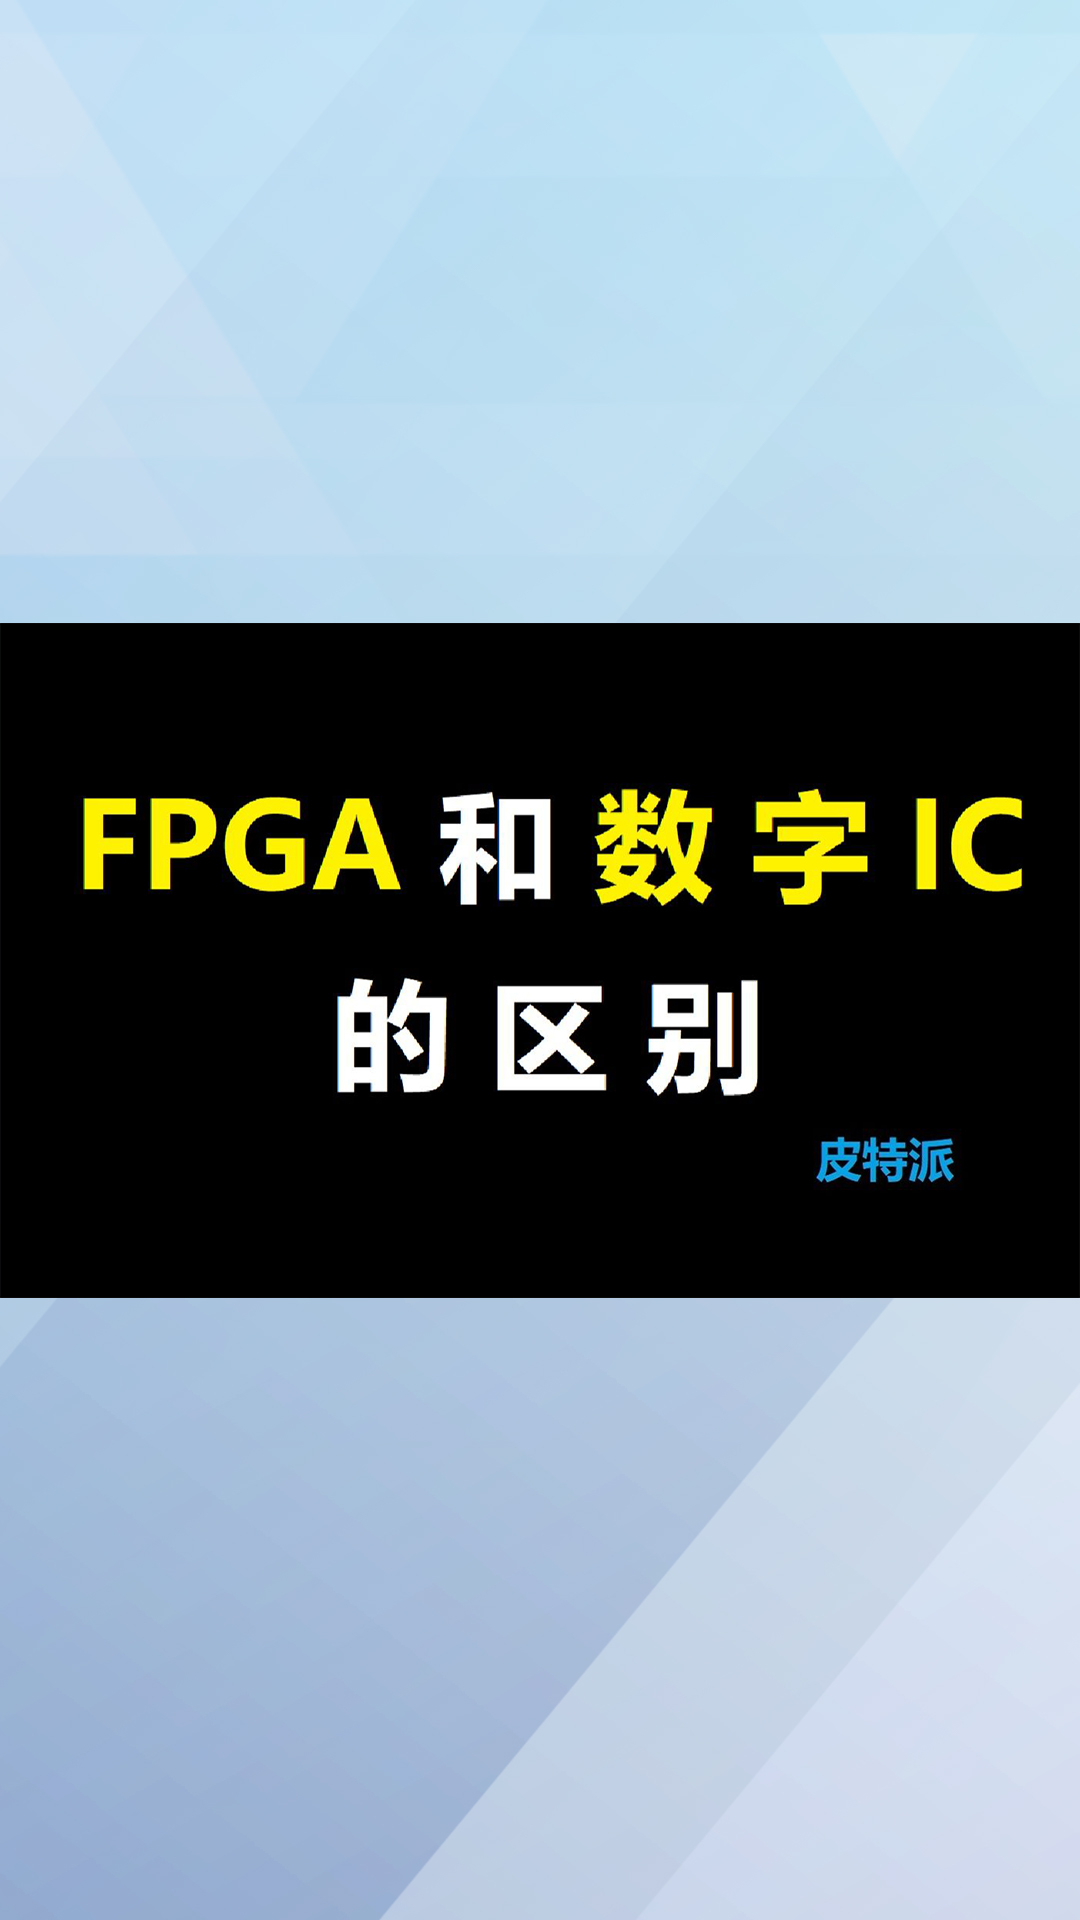 FPGA与数字IC有什么区别？